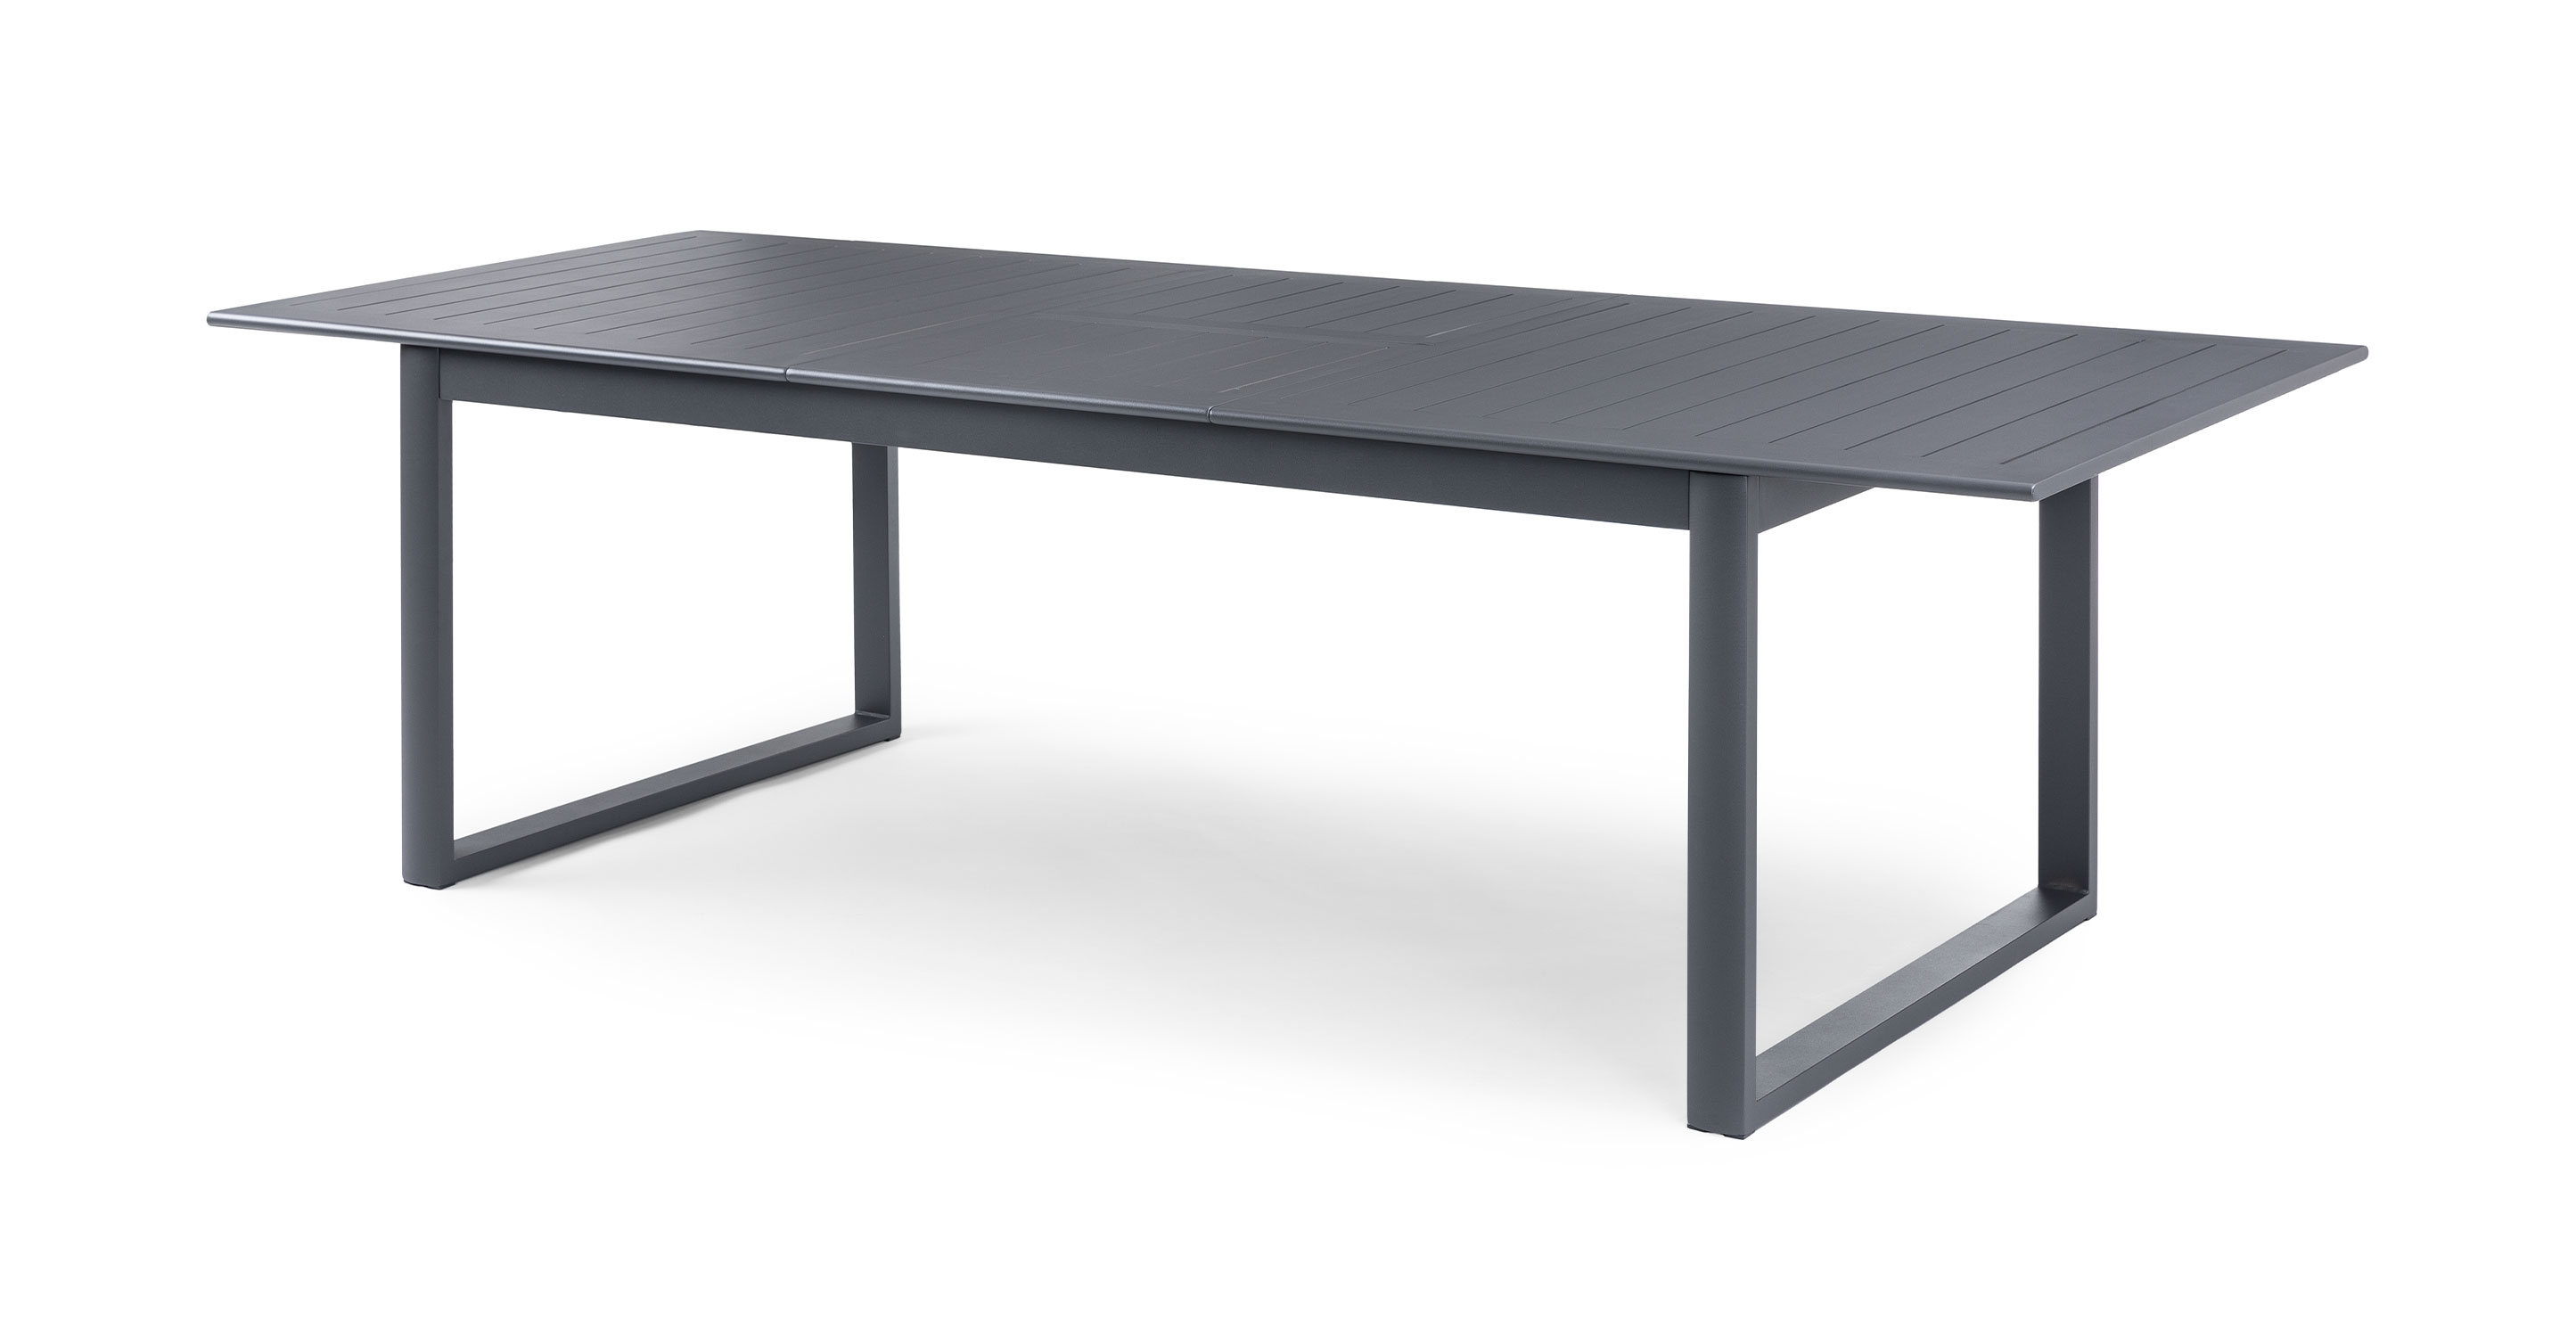 Ofer Dark Gray Table for 6, Extendable - Image 1